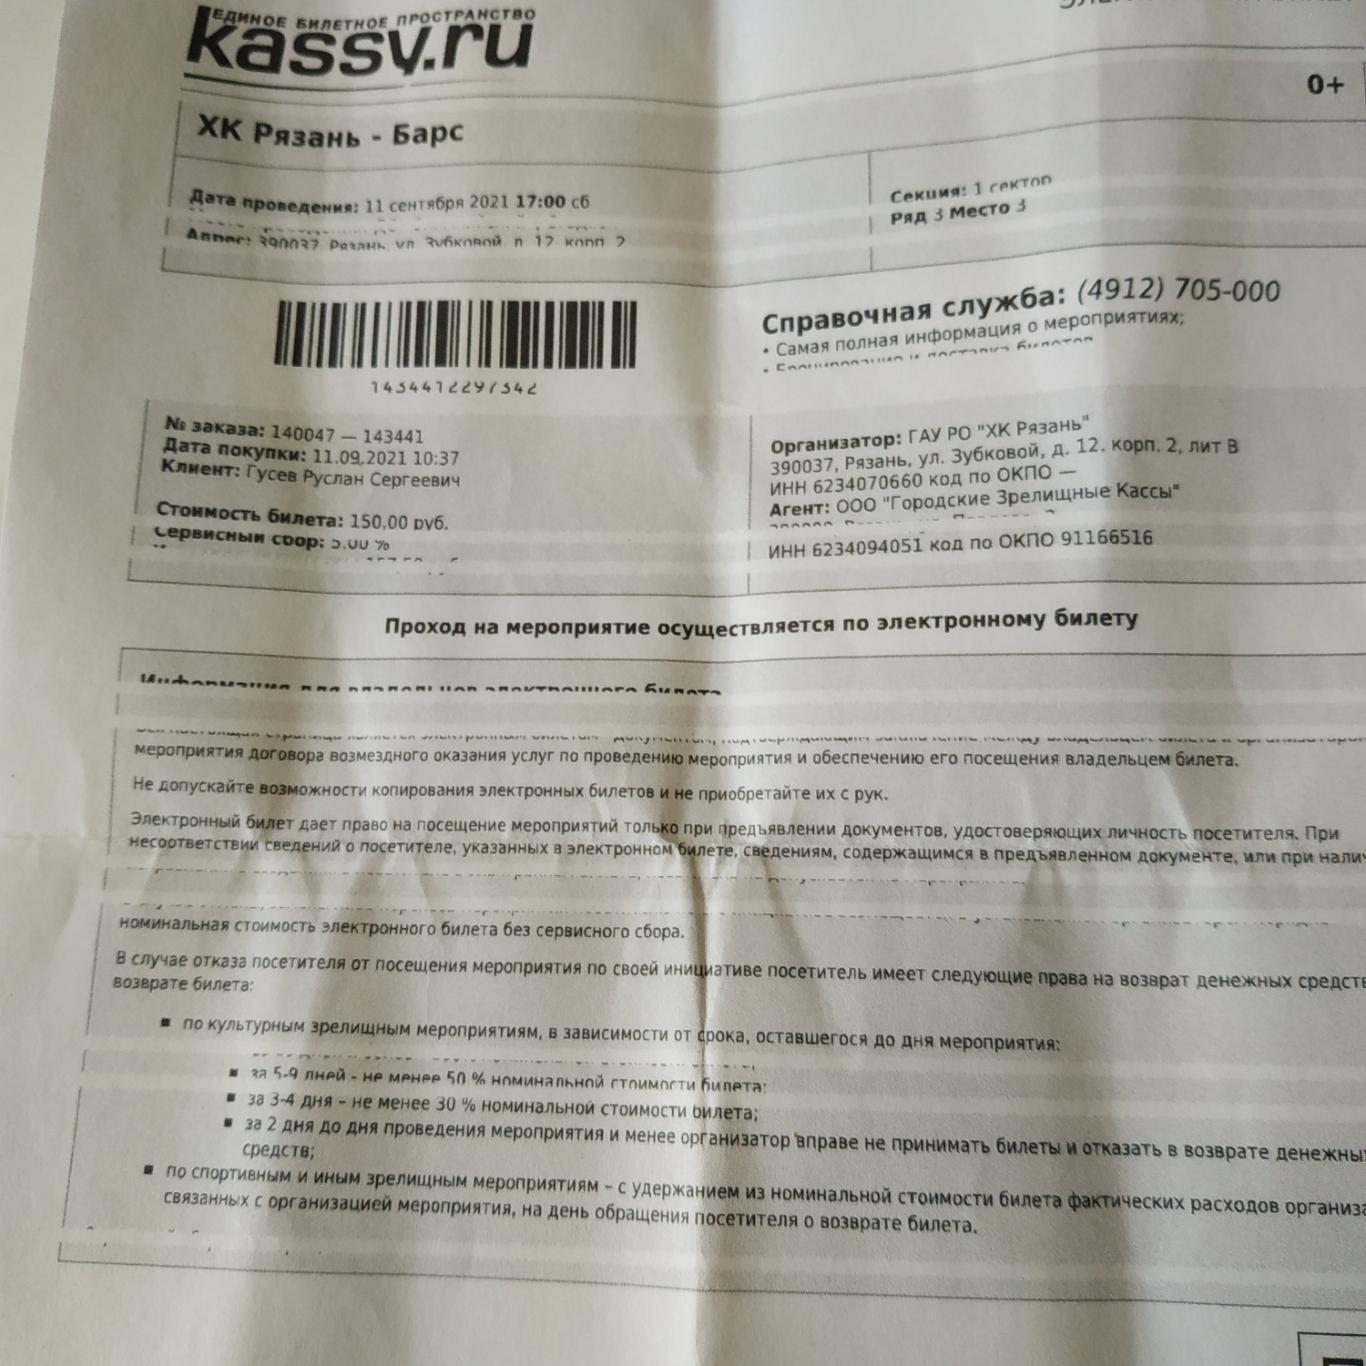 ХК Рязань - Барс (Казань) 11.09.2021.( Электронной билет)